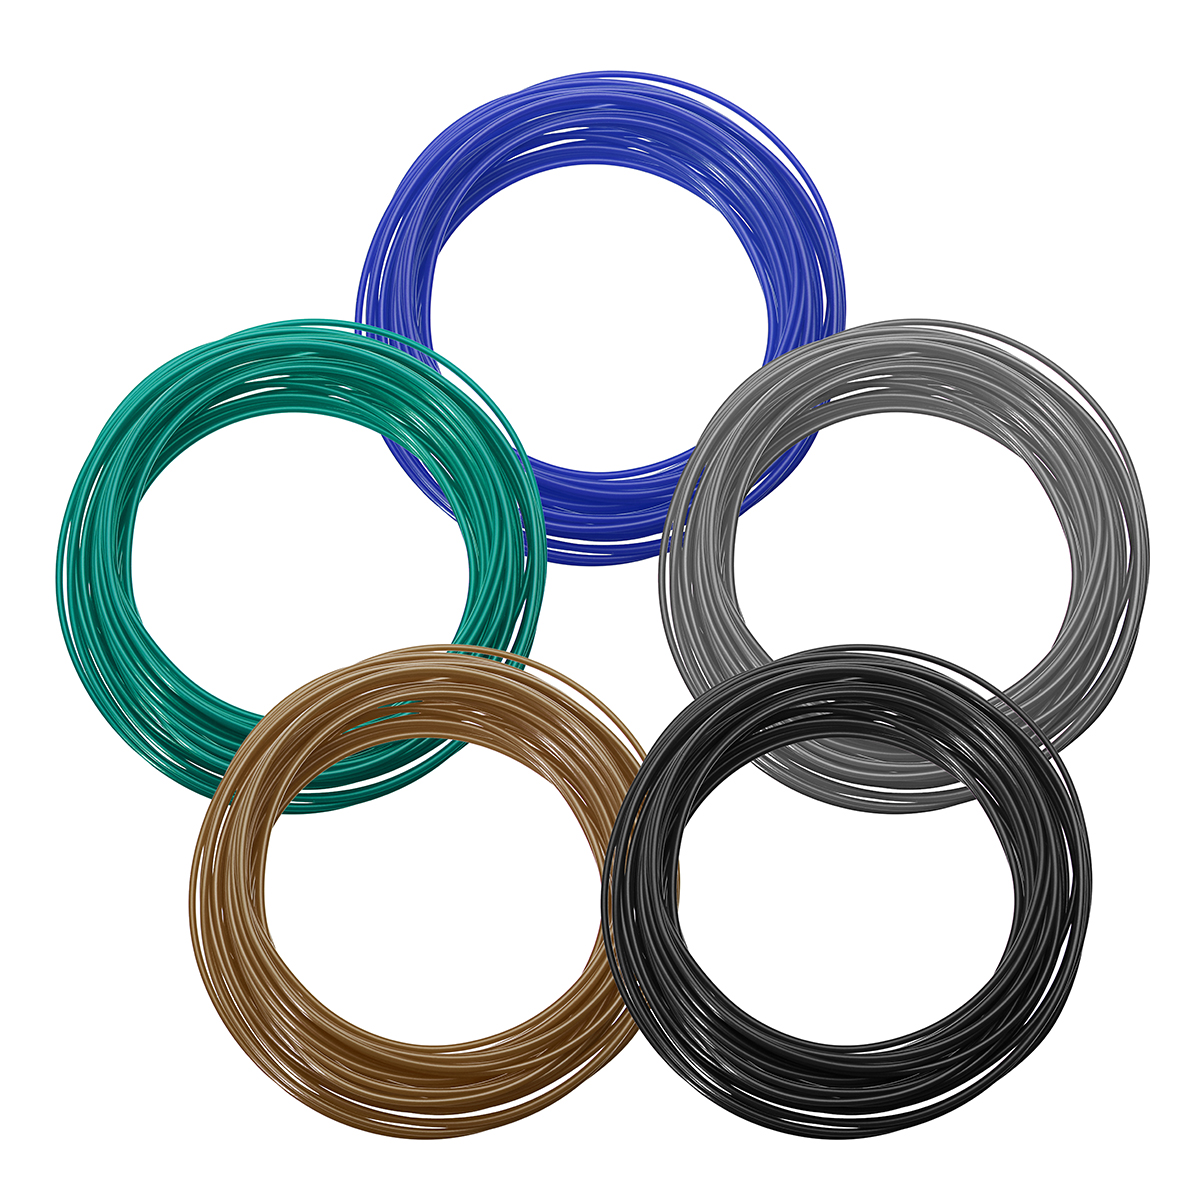 20 Colors/Pack 5/10m Length Per Color PLA 1.75mm Filament for 3D Printing Pen 0.4mm Nozzle 12